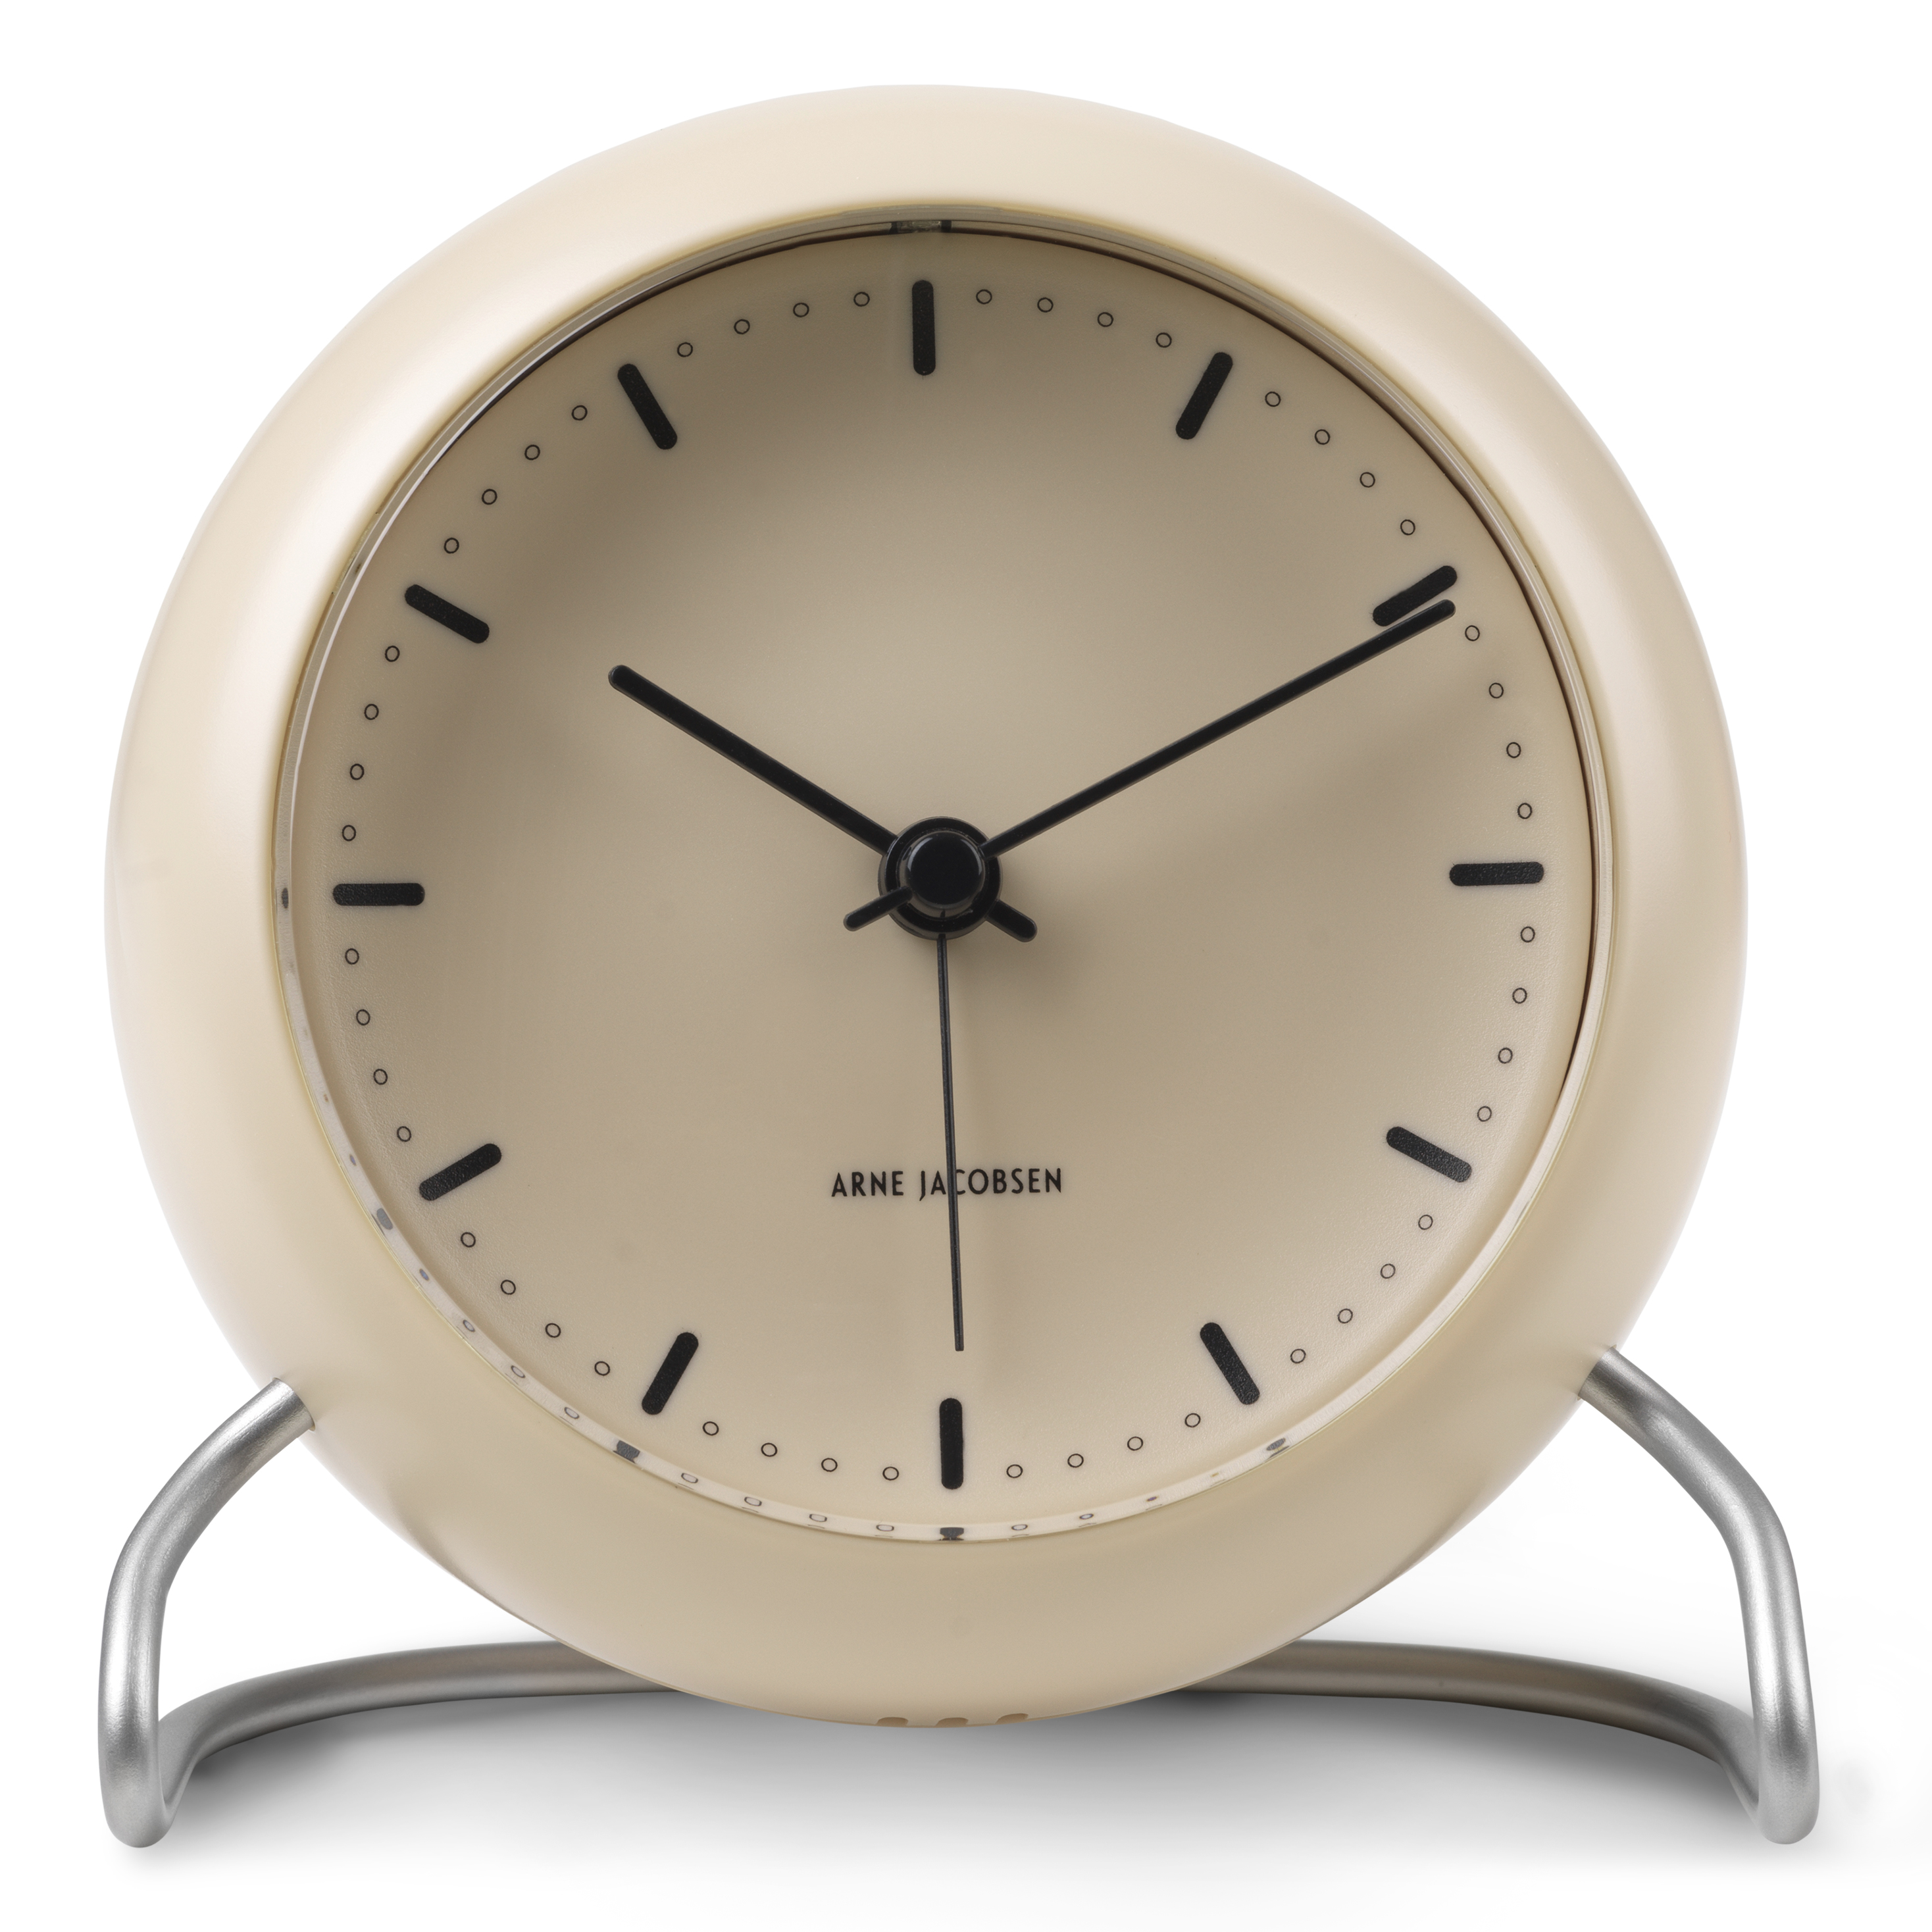 Arne Jacobsen Clocks | アルネ・ヤコブセン クロック からのAJ City 